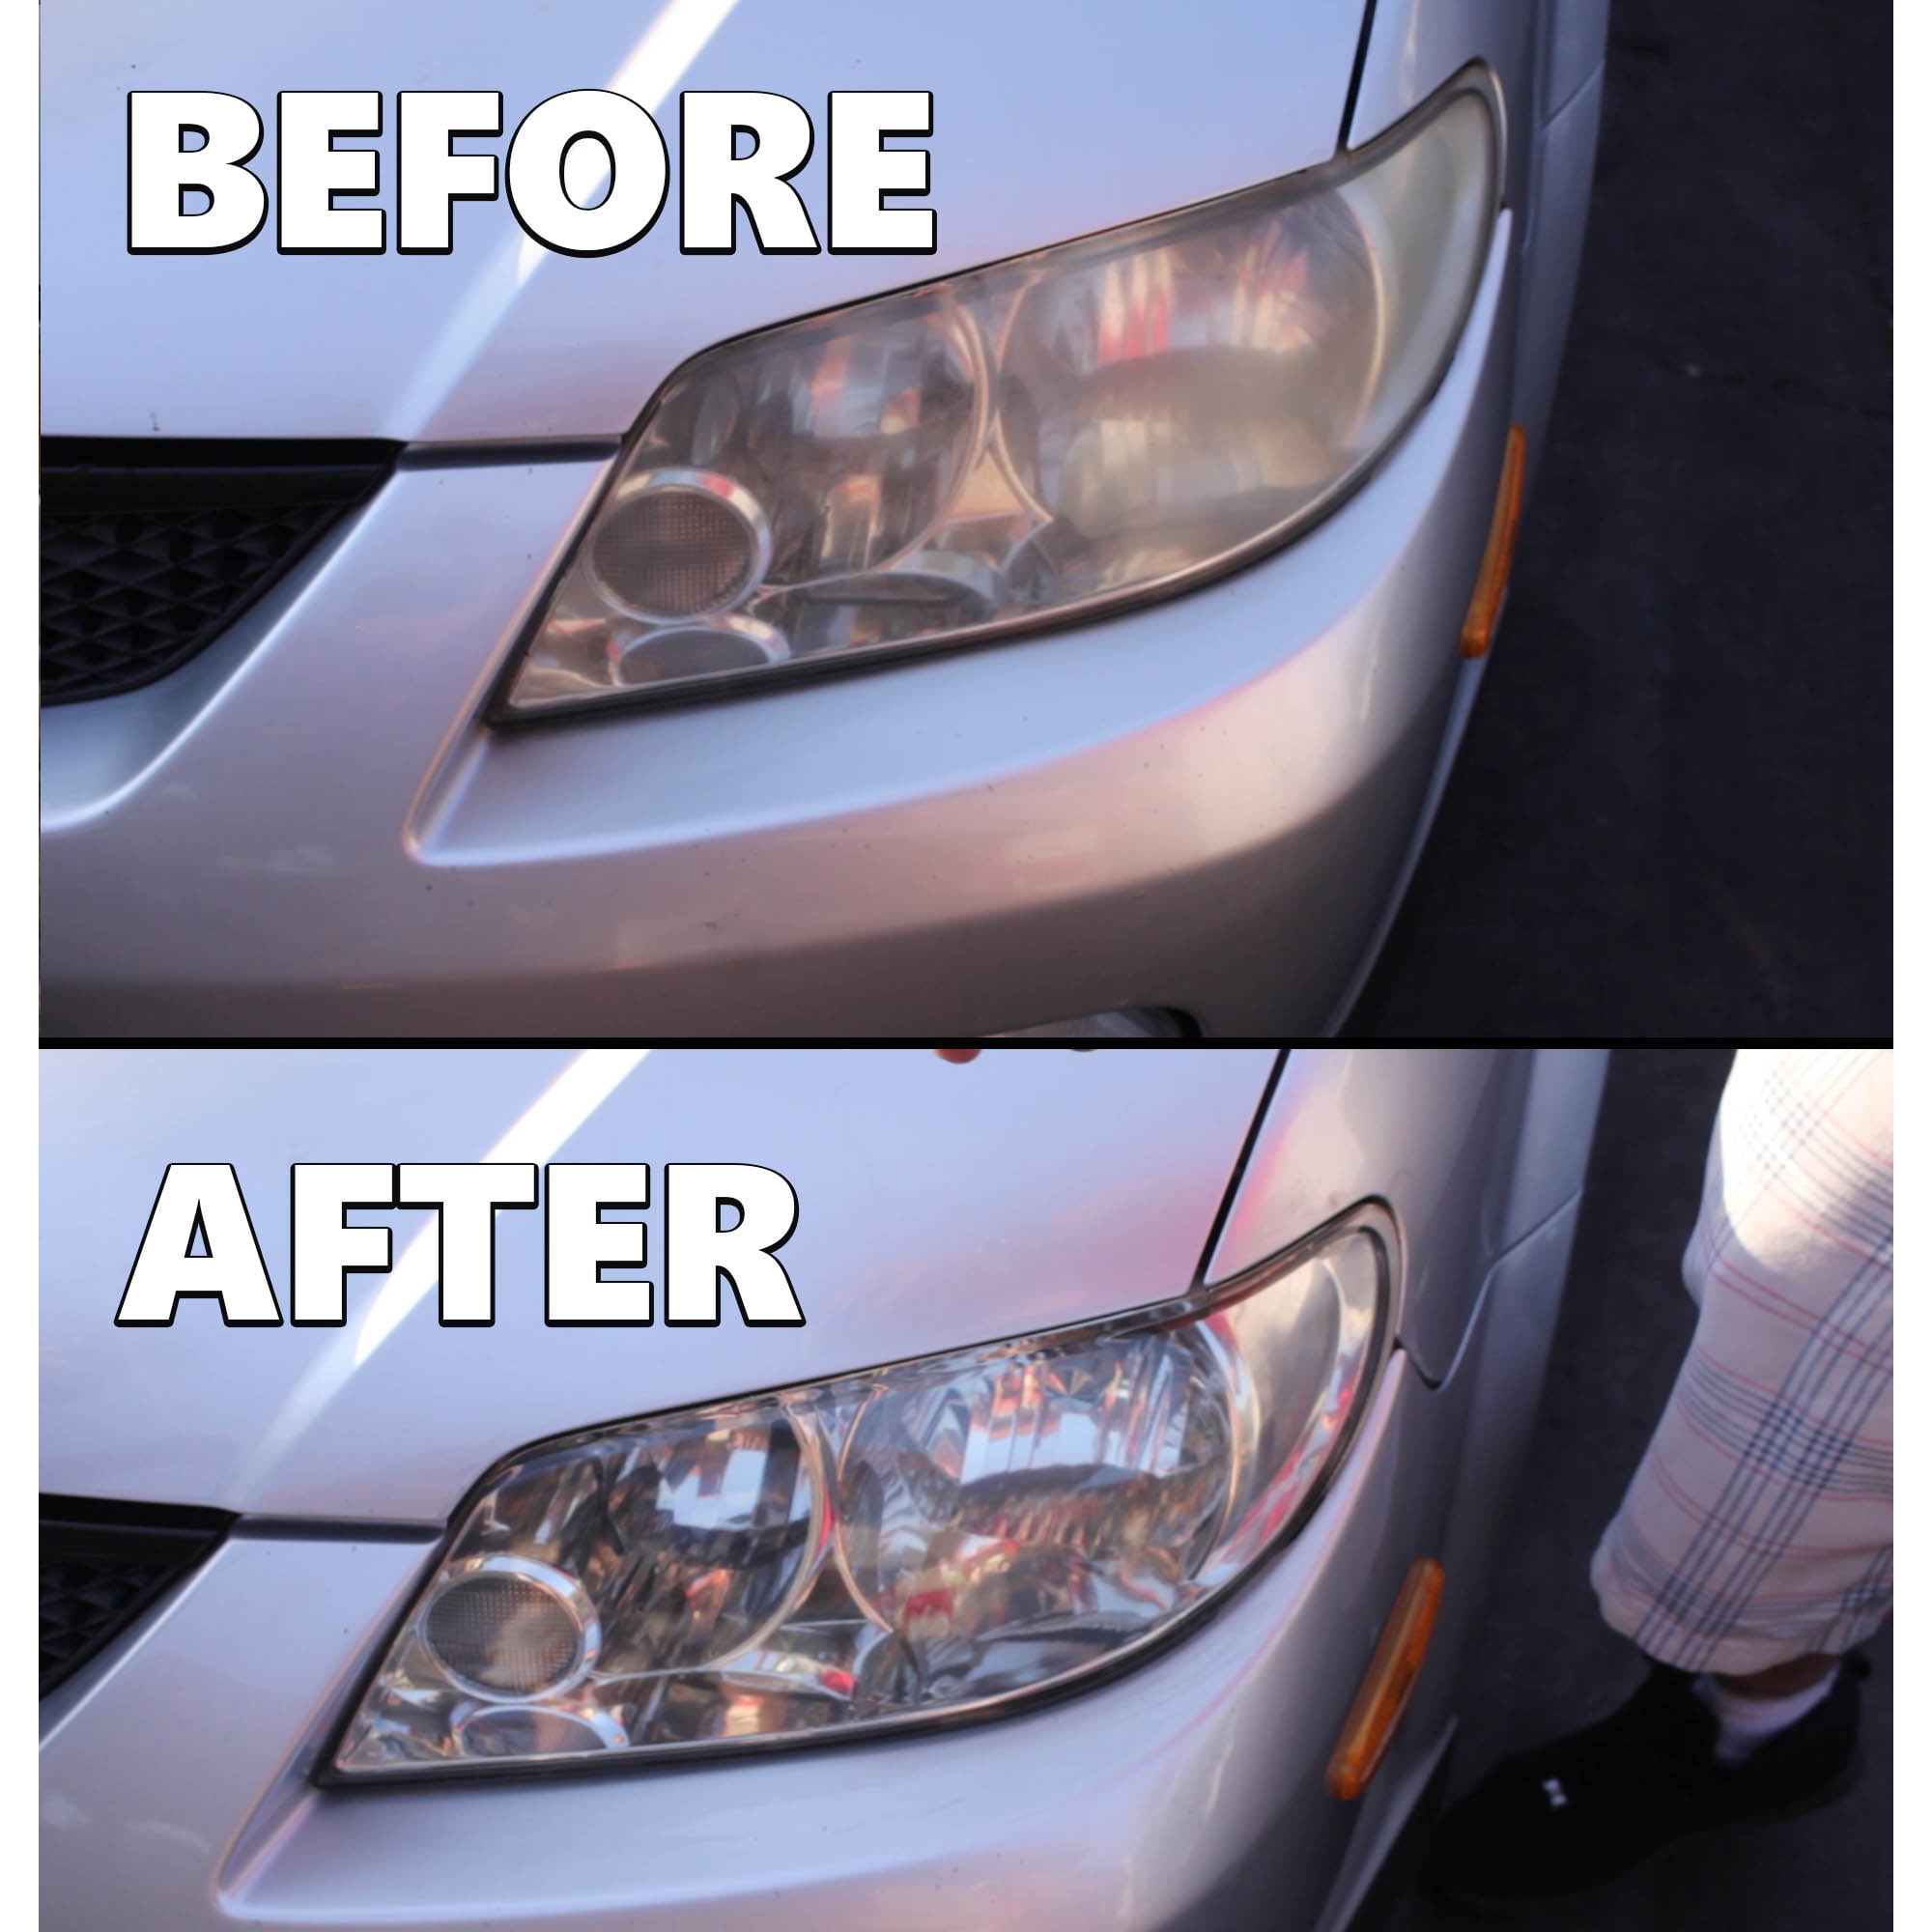 Mrigtriles Car Headlight Restoration Kit, Car Headlight Cleaner Wipes,  Headlights Lens Restoration Cleaner DIY Polish Sanding Discs